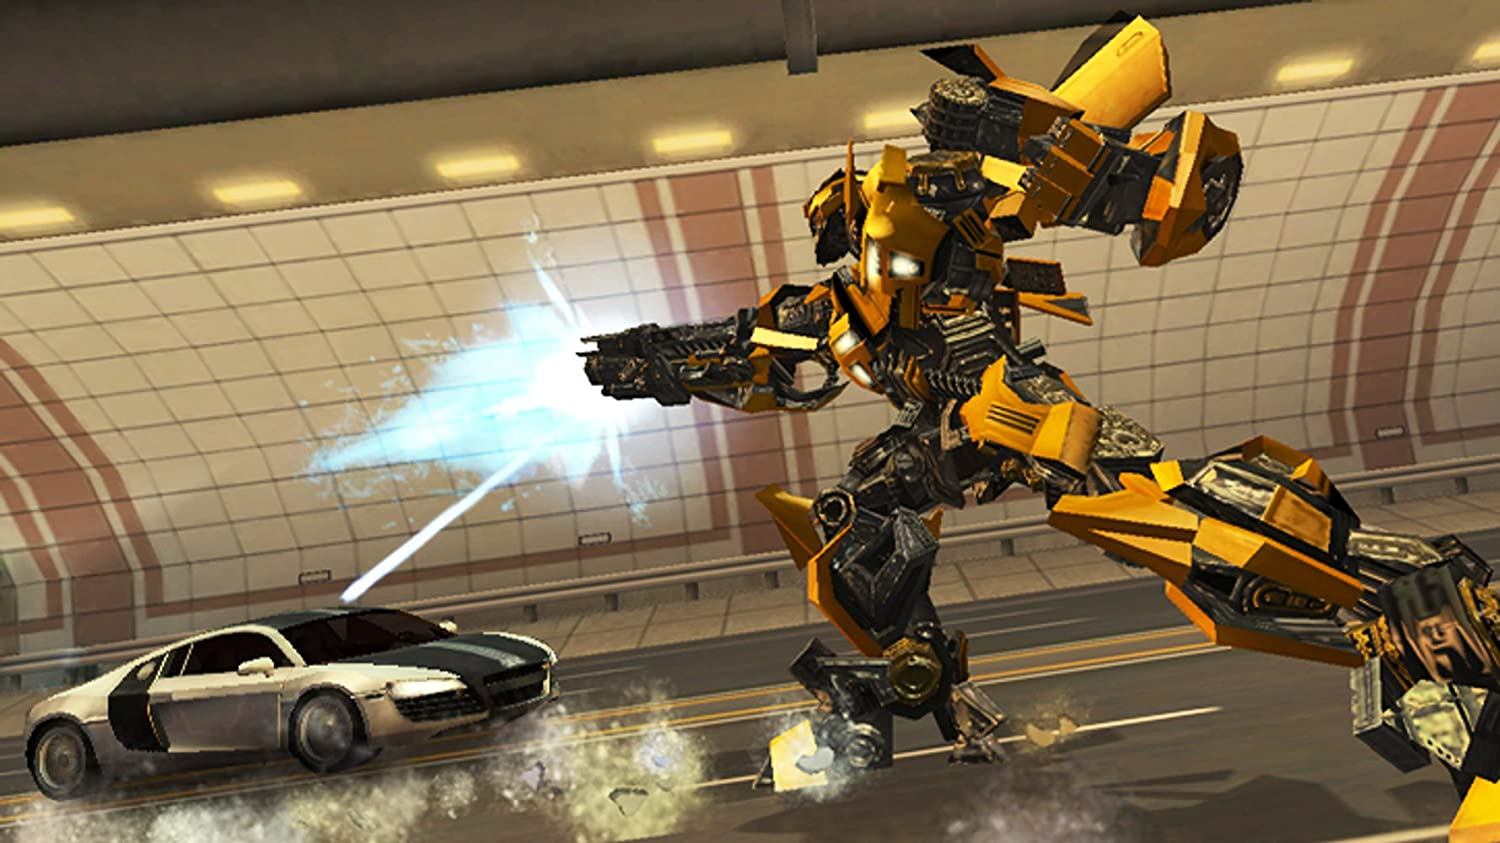 Transformers 2 Rache - [Nintendo Wii] Die 